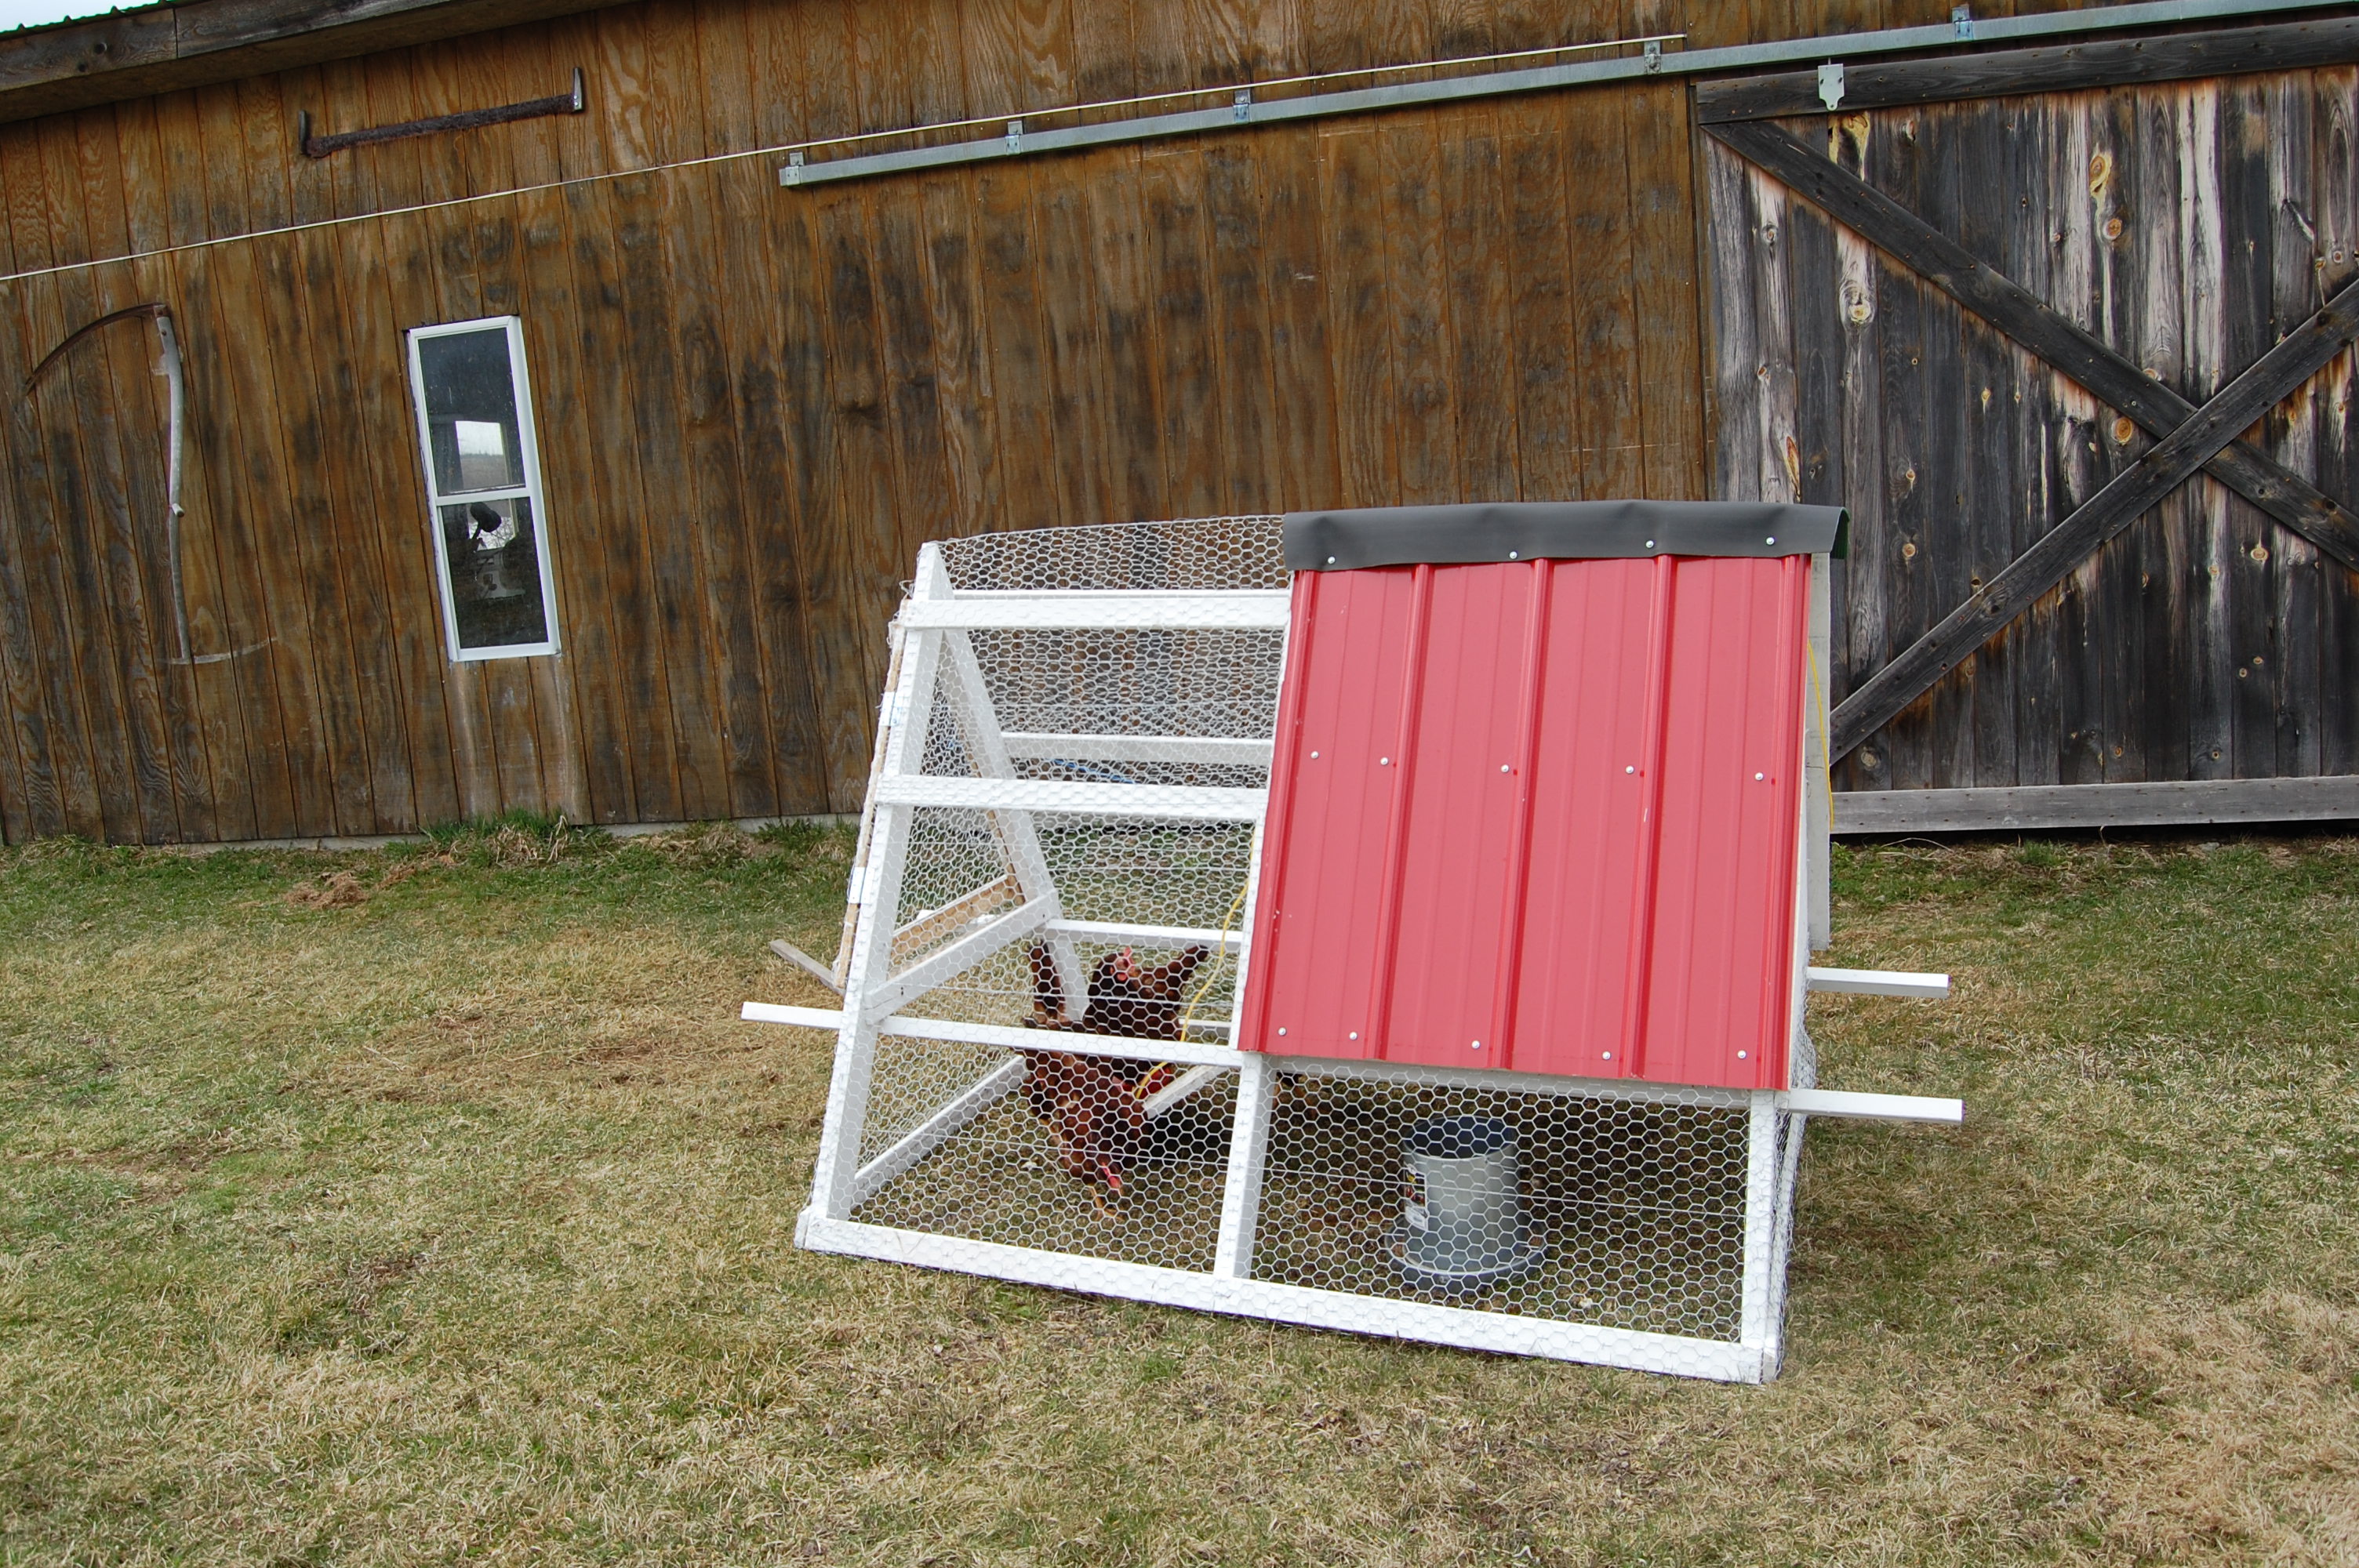 Preparing for Chickens – Whitewashing the Coop | My Rural Garden